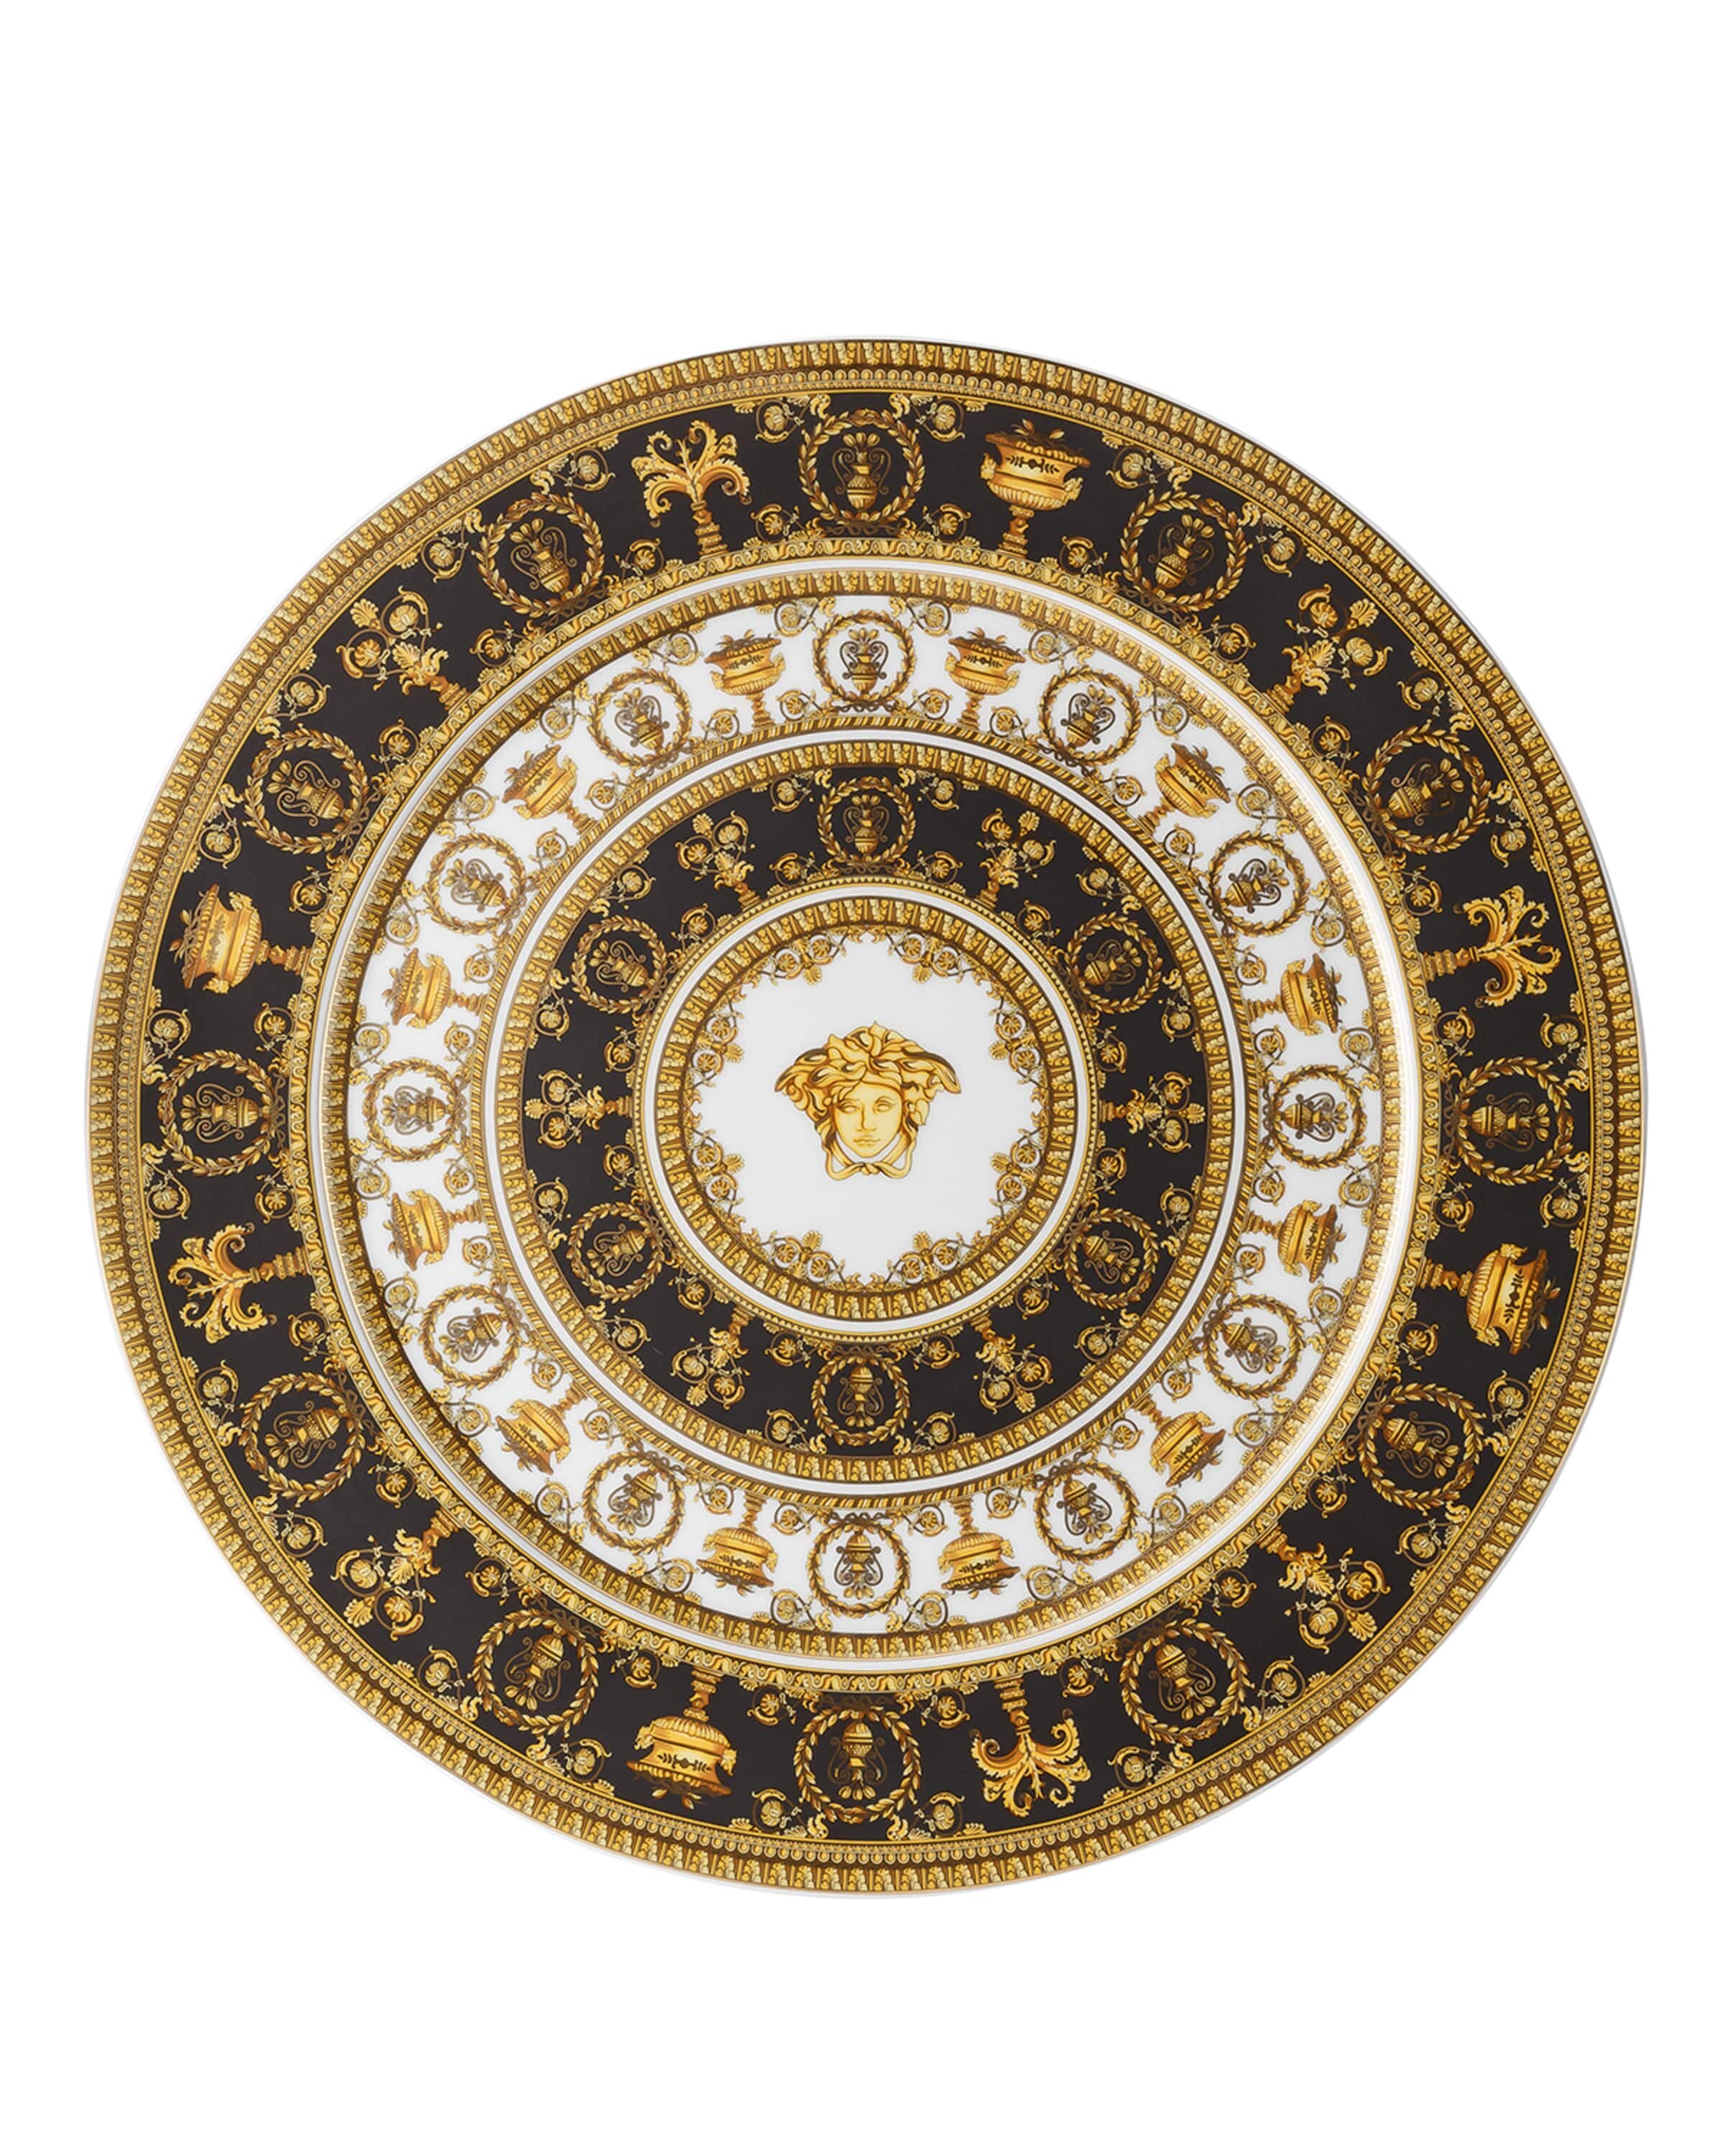 Versace - I Love Baroque Service Plate